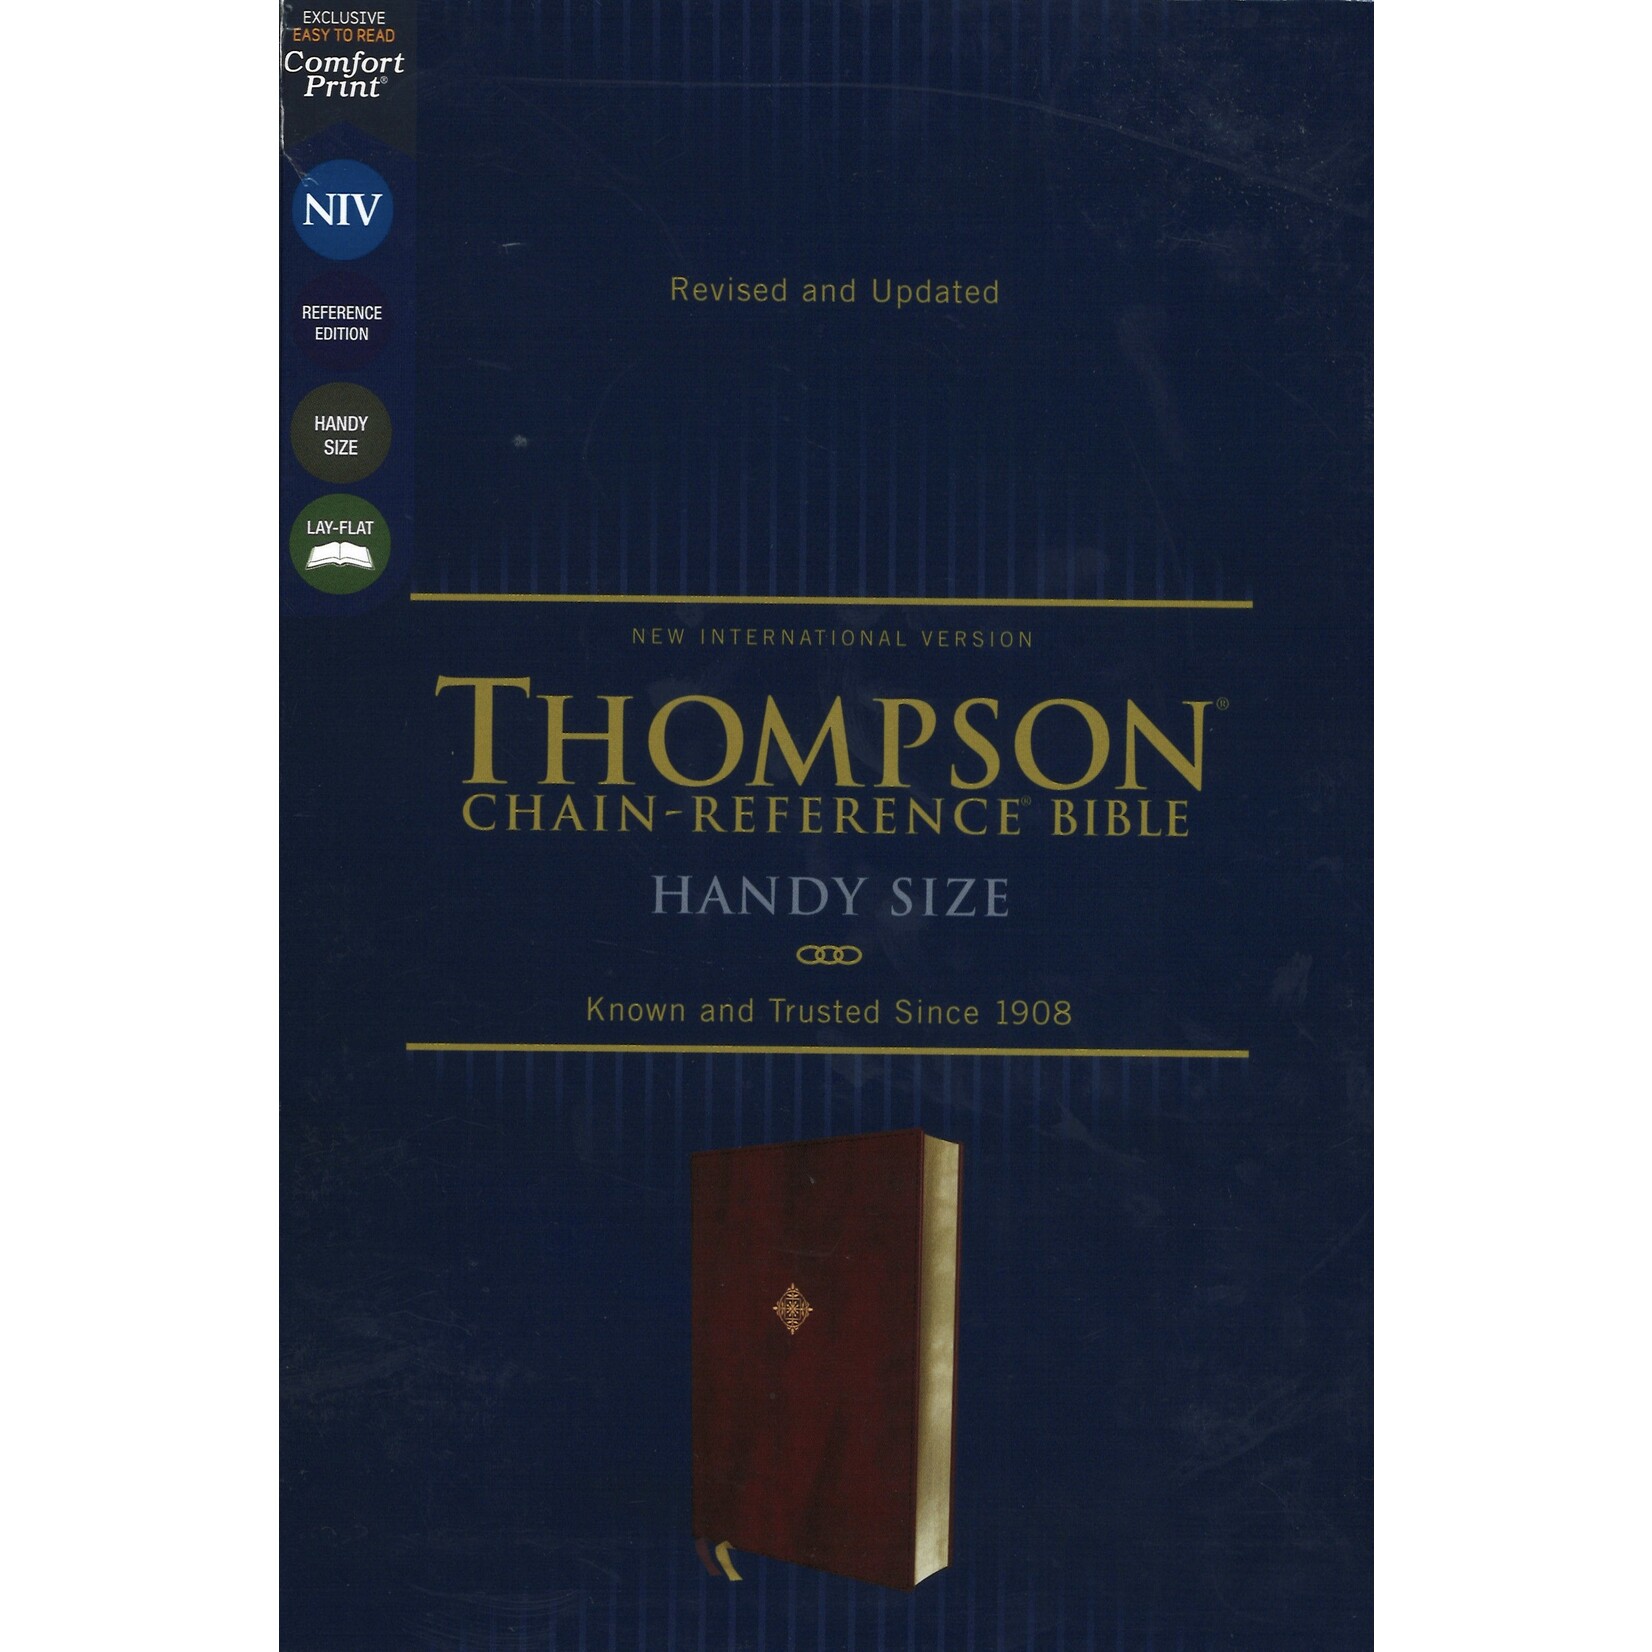 NIV THOMPSON REFERENCE BIBLE HANDY SIZE